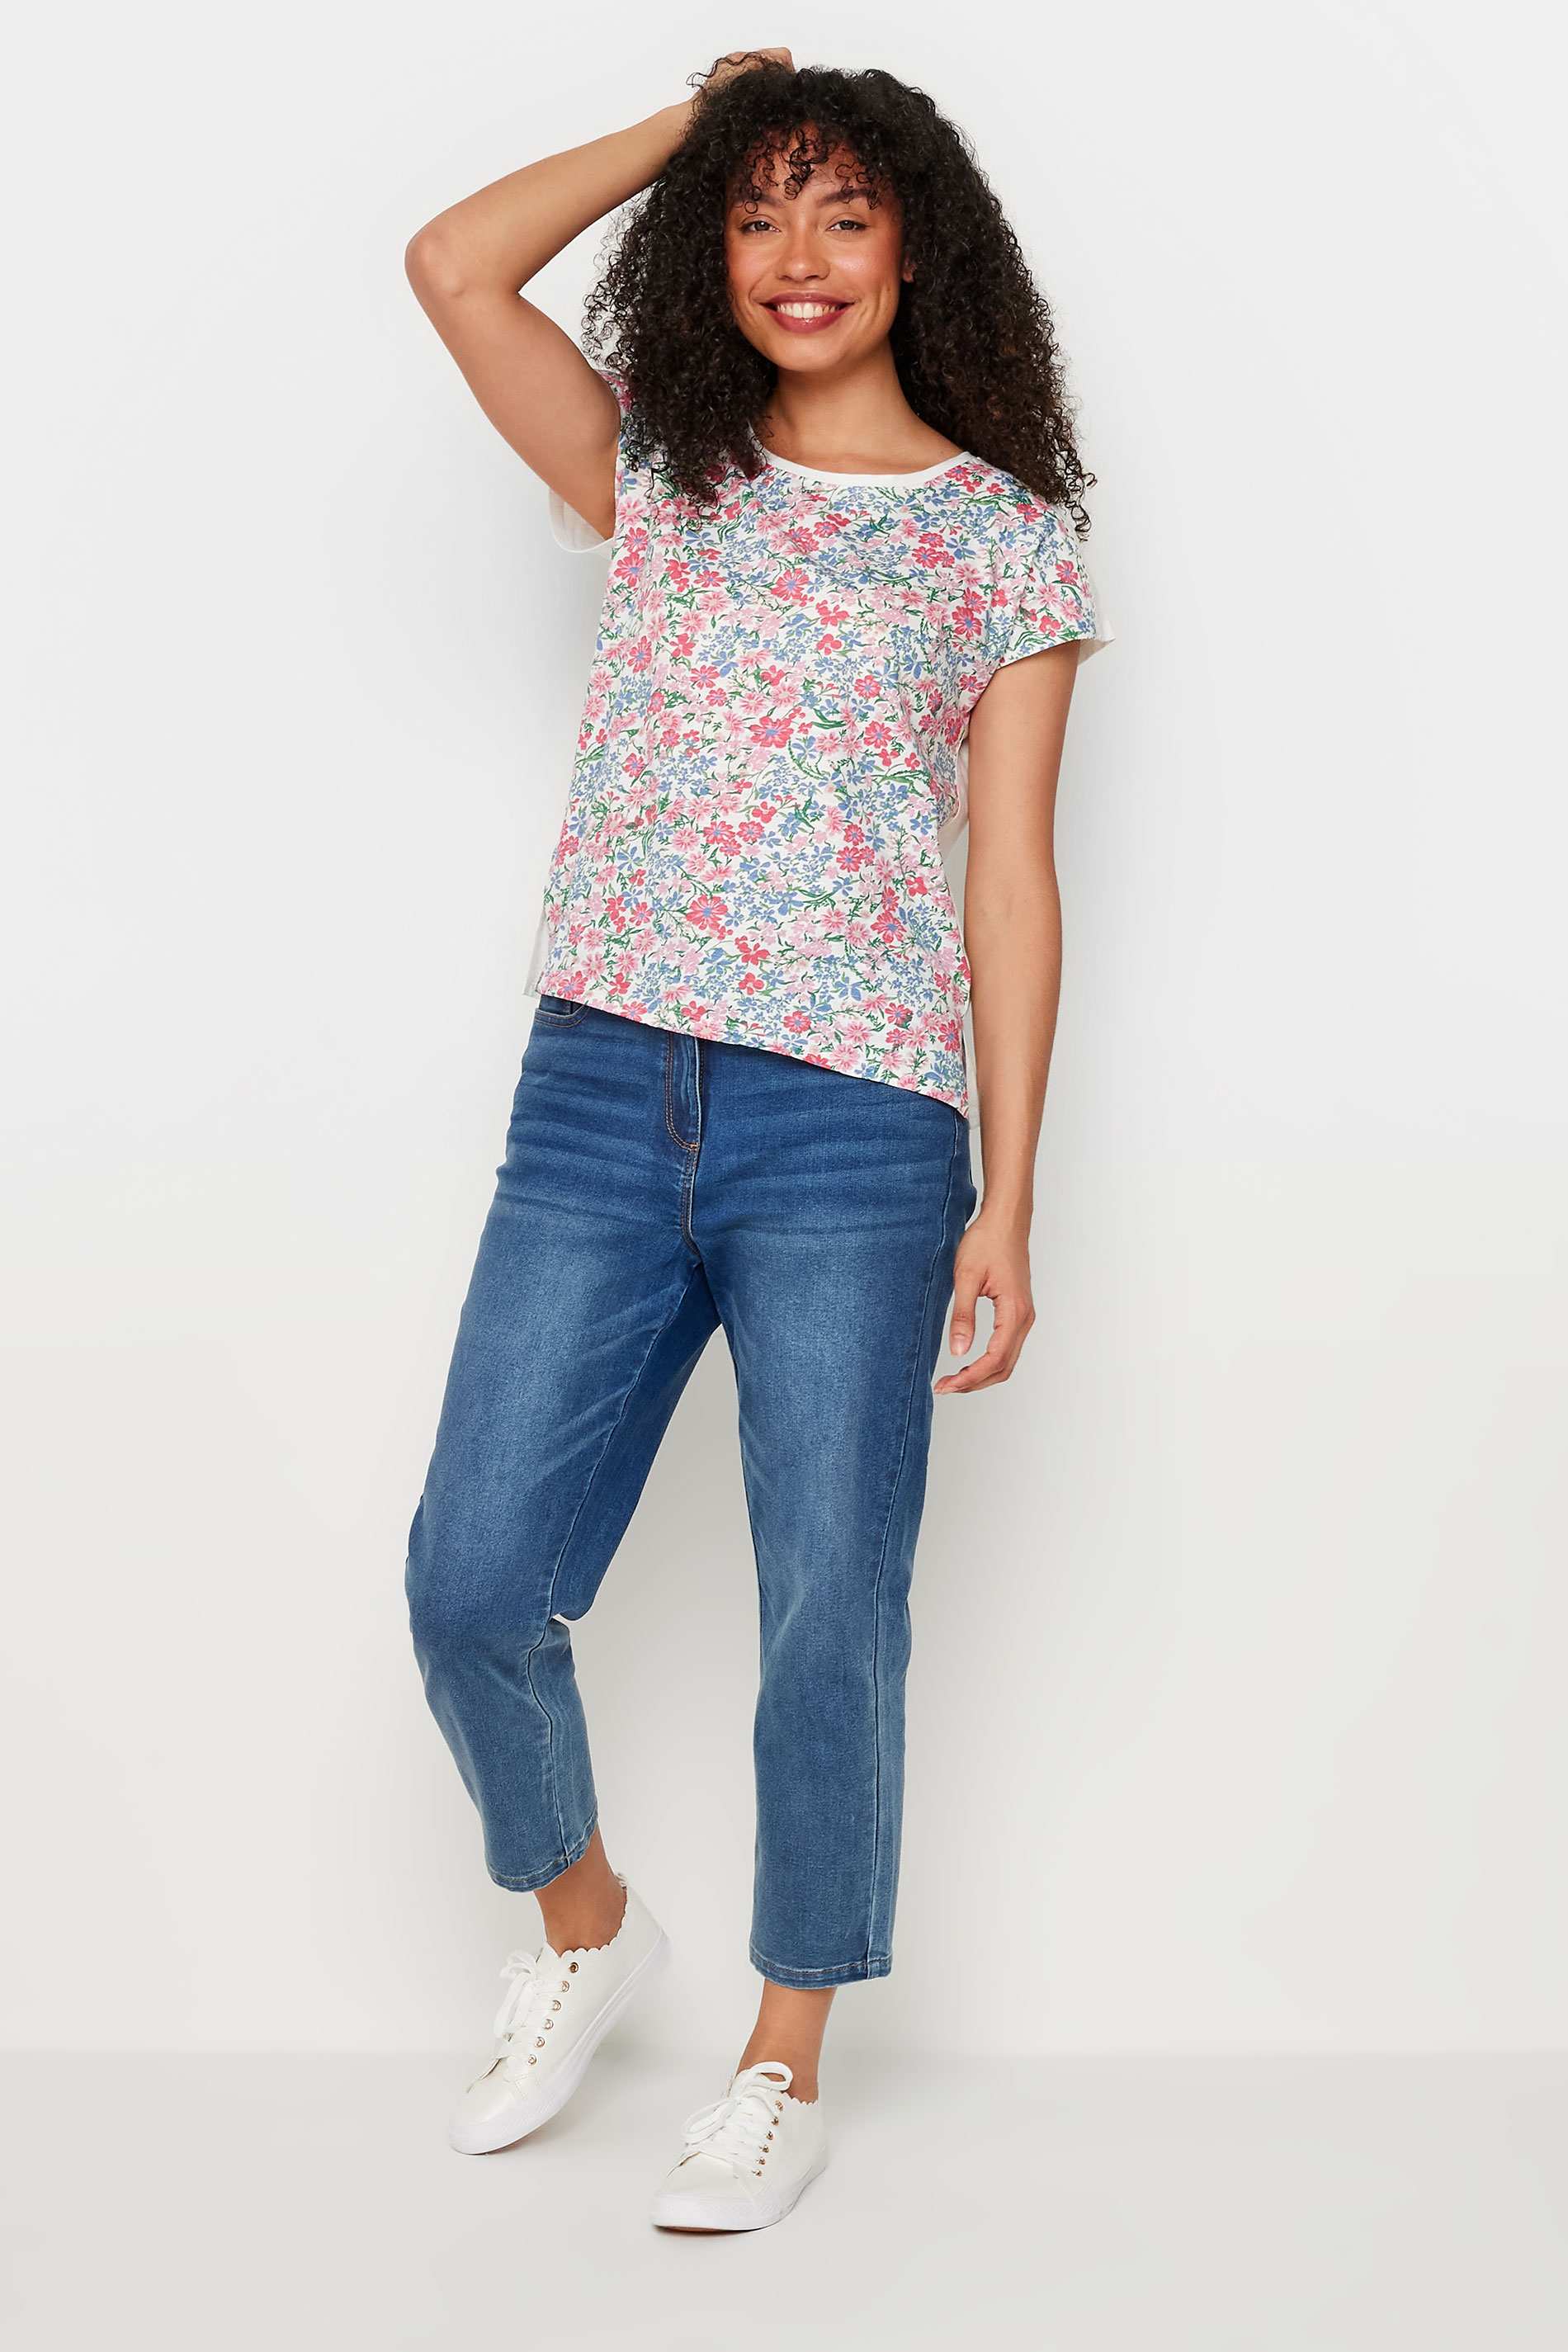 M&Co White & Pink Floral Print T-Shirt | M&Co 2